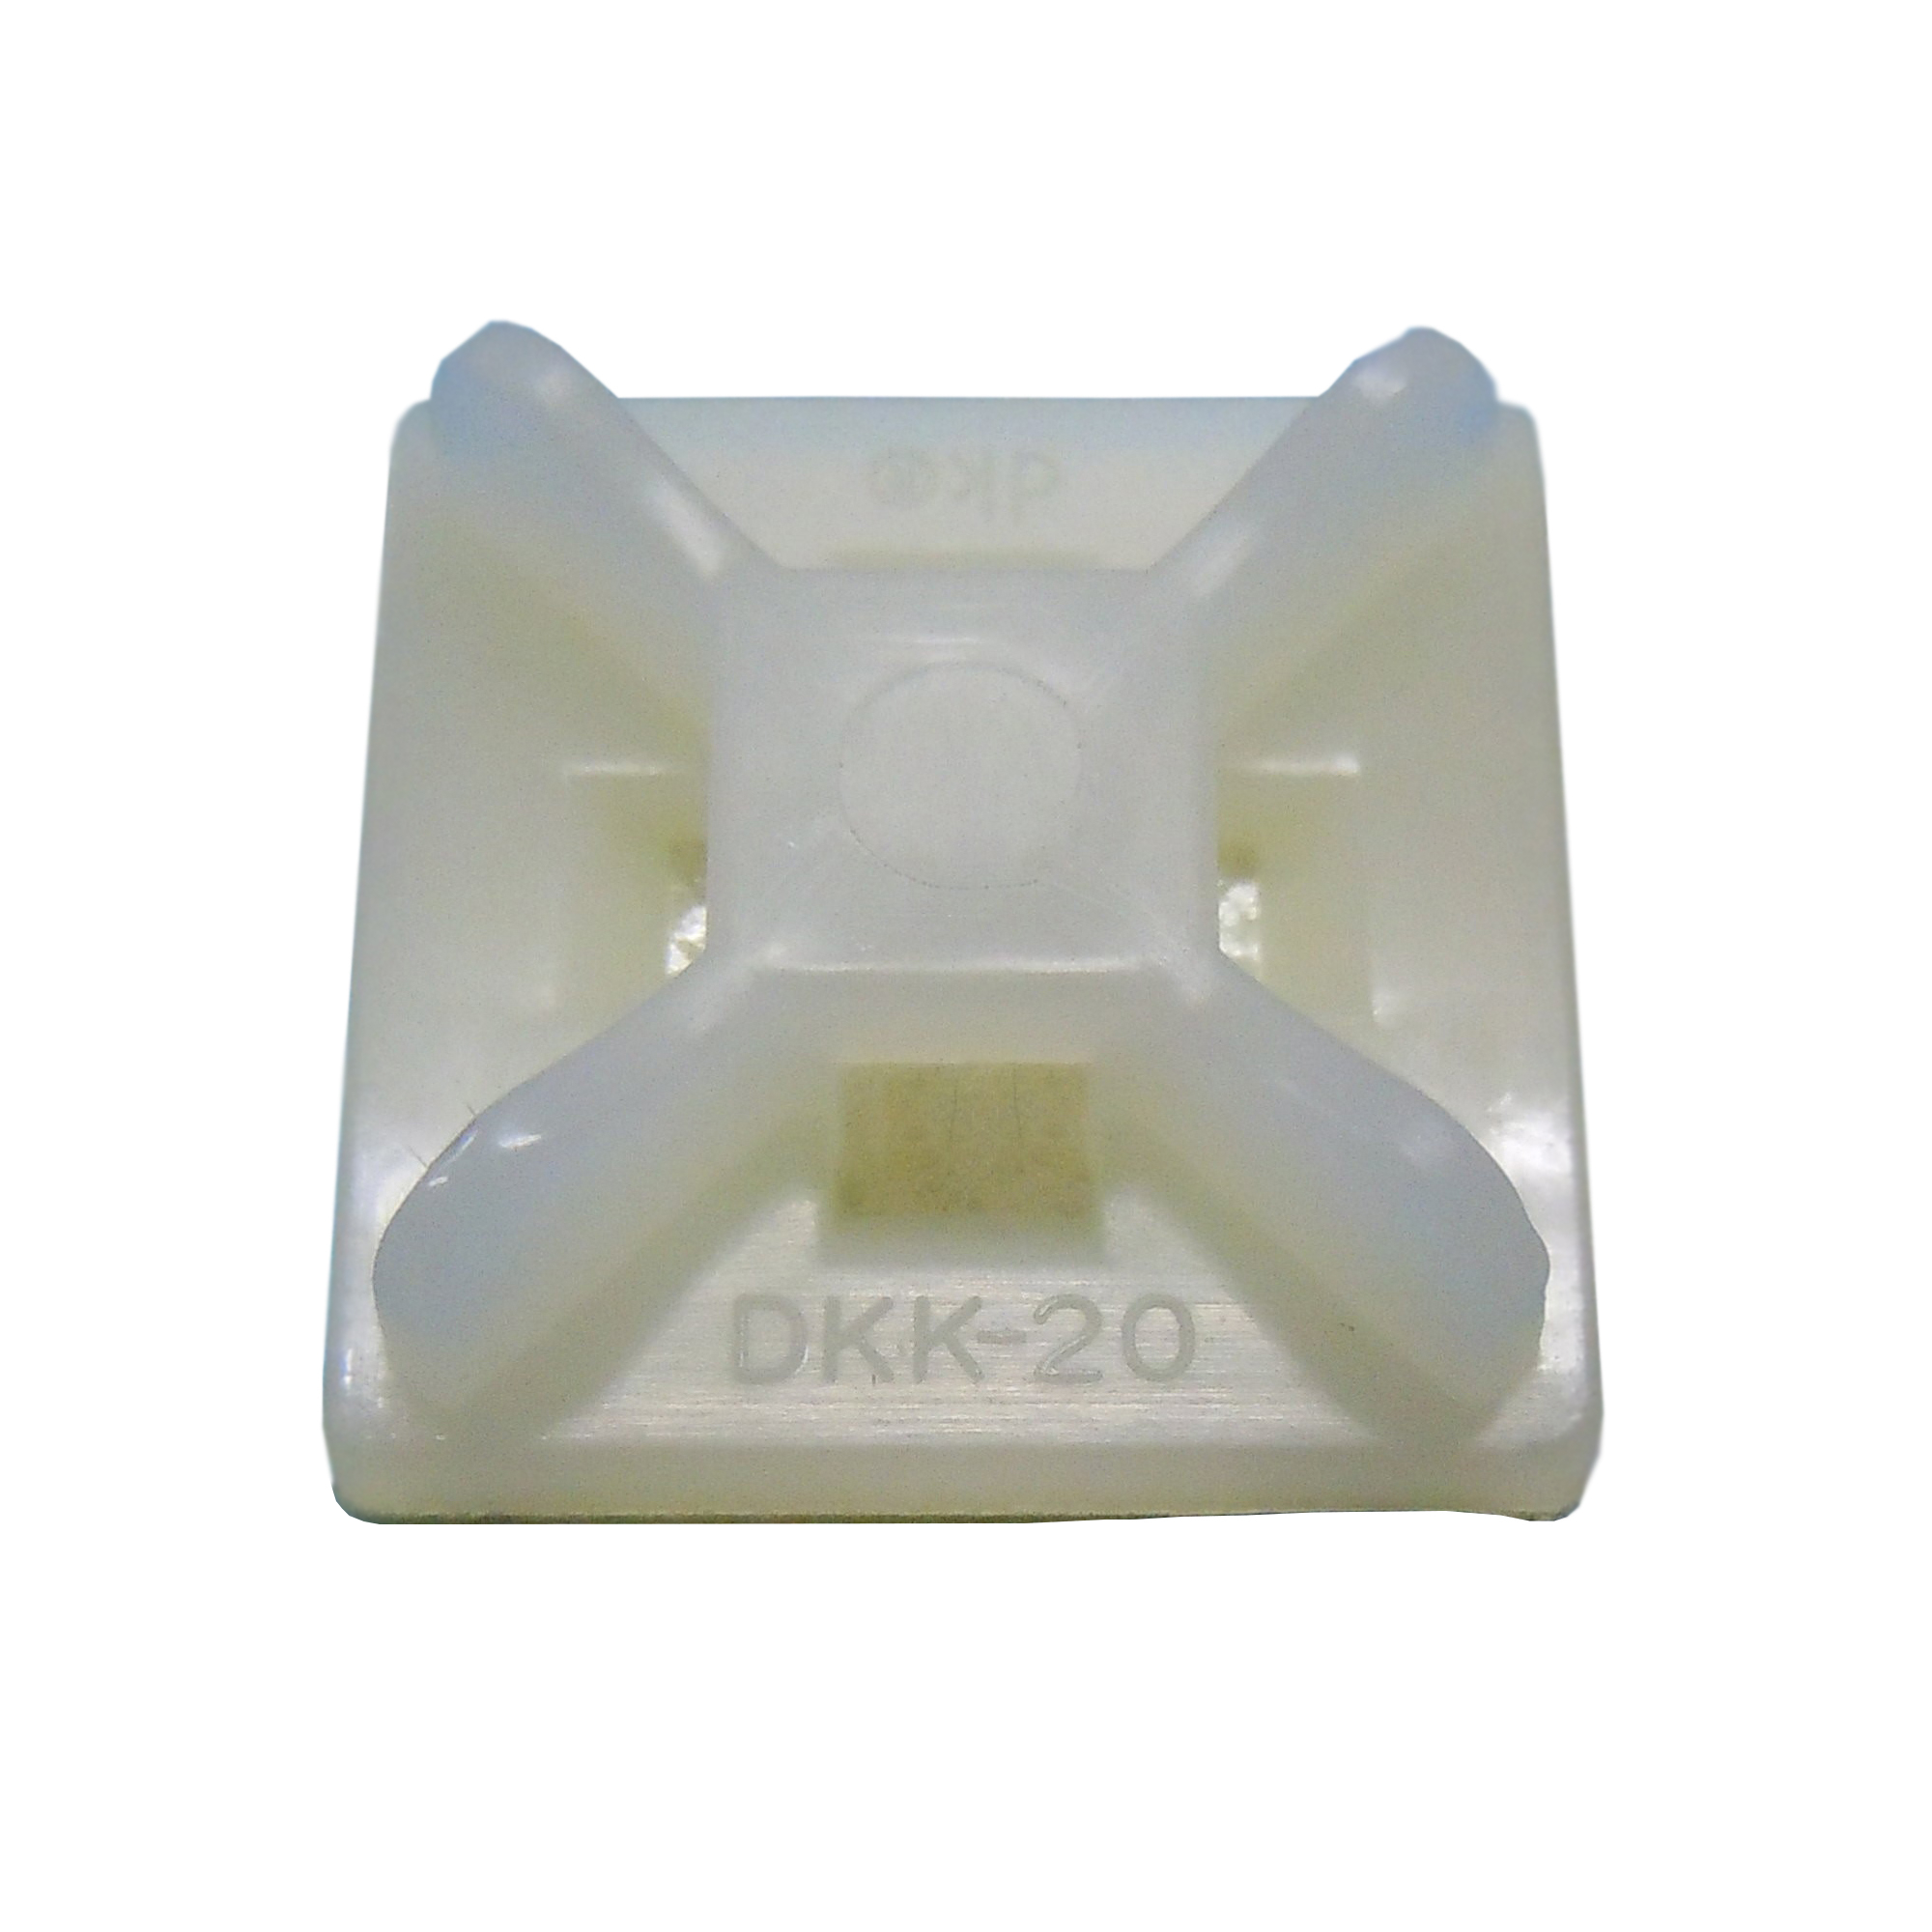 Adhesive Fixture (Strong Adhesive) DKK-30-100P